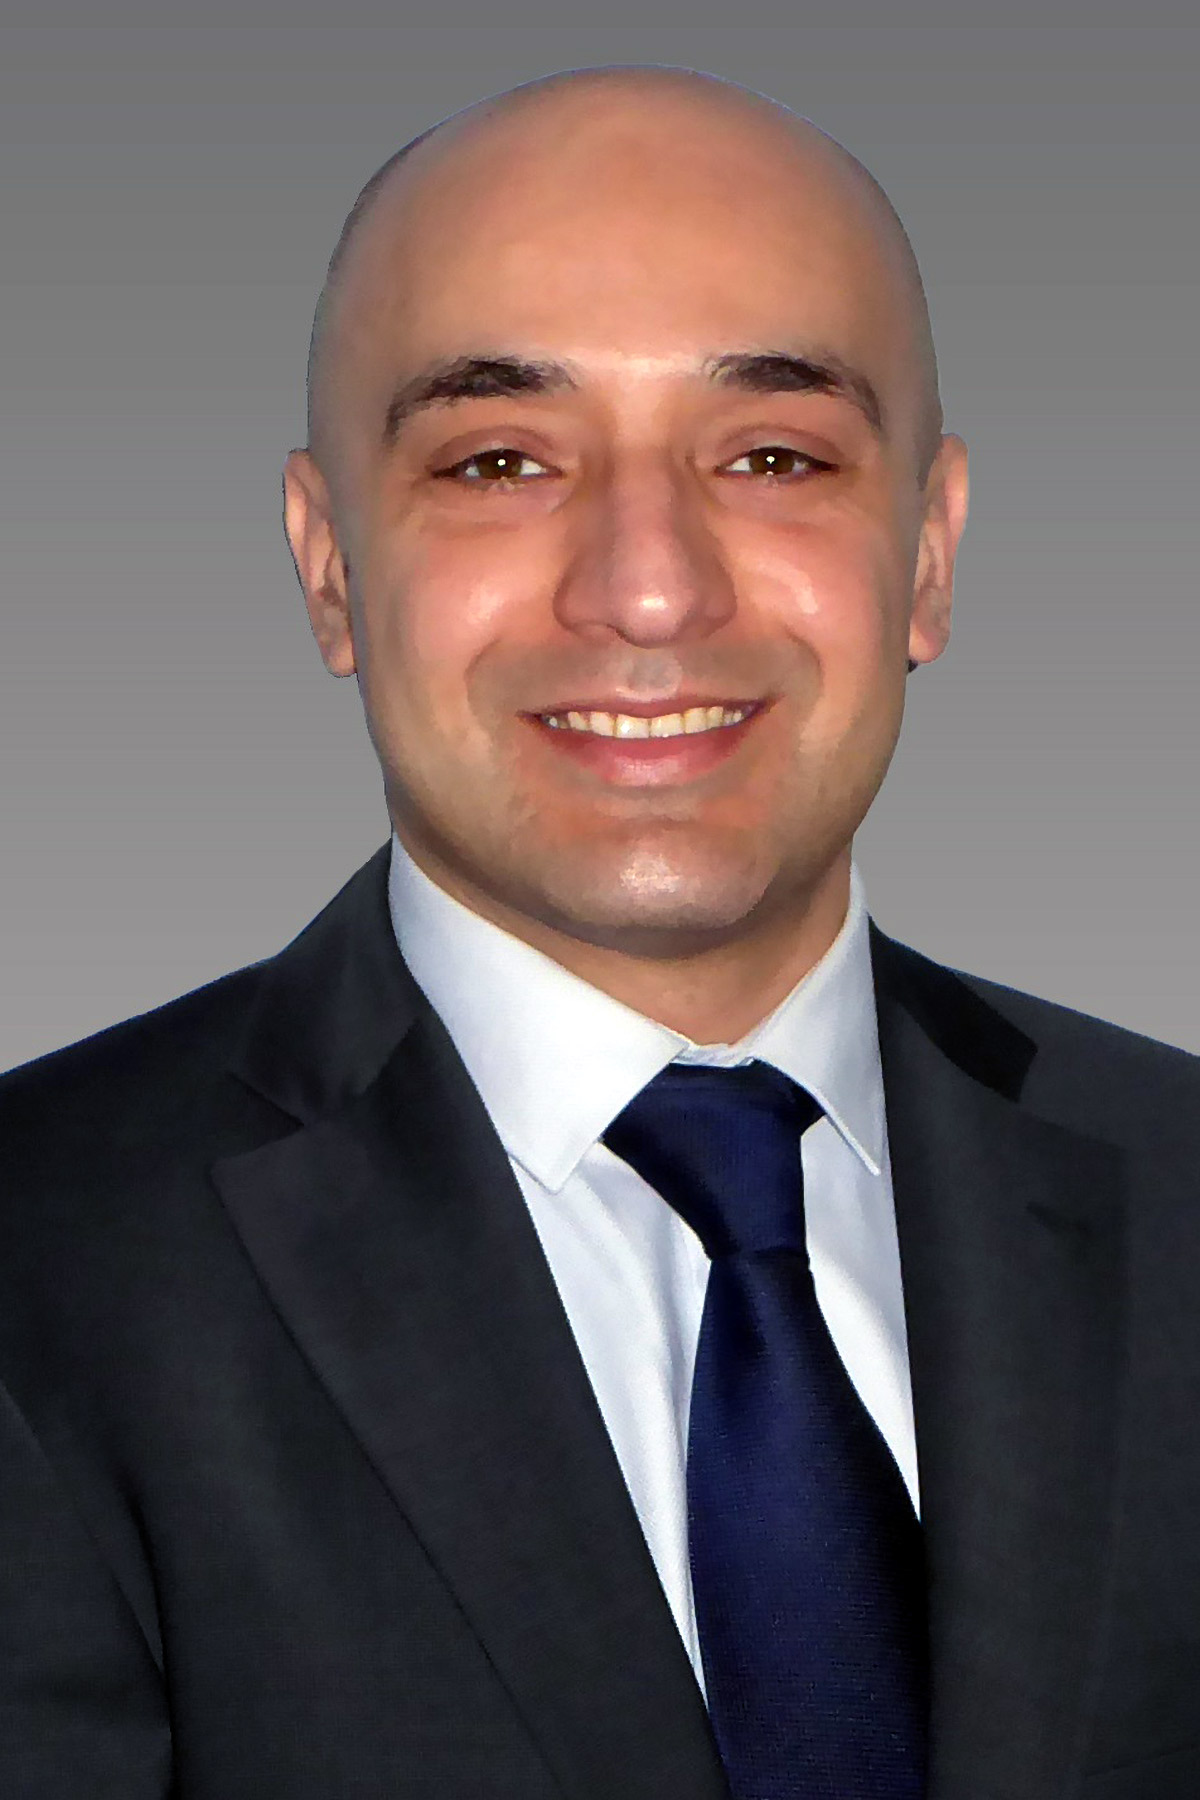 Profile image of Usama  Ahmed Ali, MD, PHD